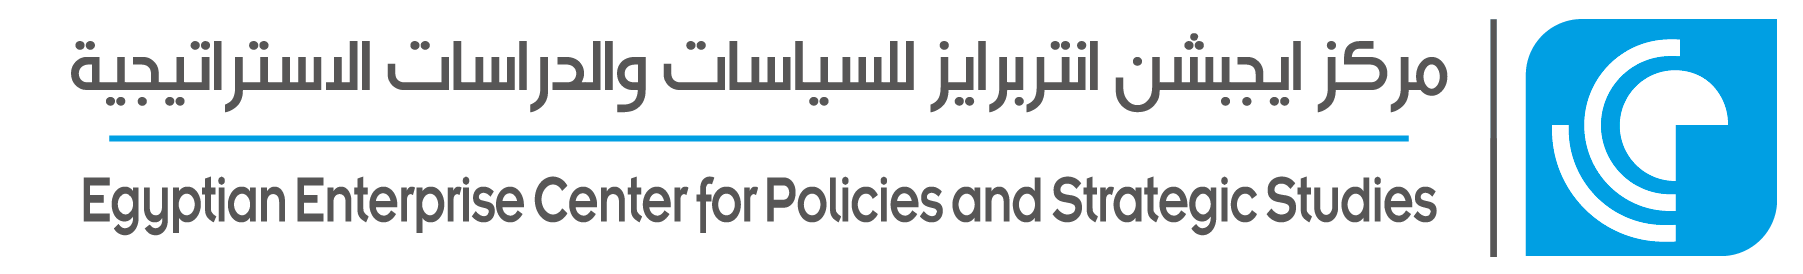 مركز ايجيبشن انتربرايز للسياسات والدراسات الإستراتيجية-Egyptian Enterprise